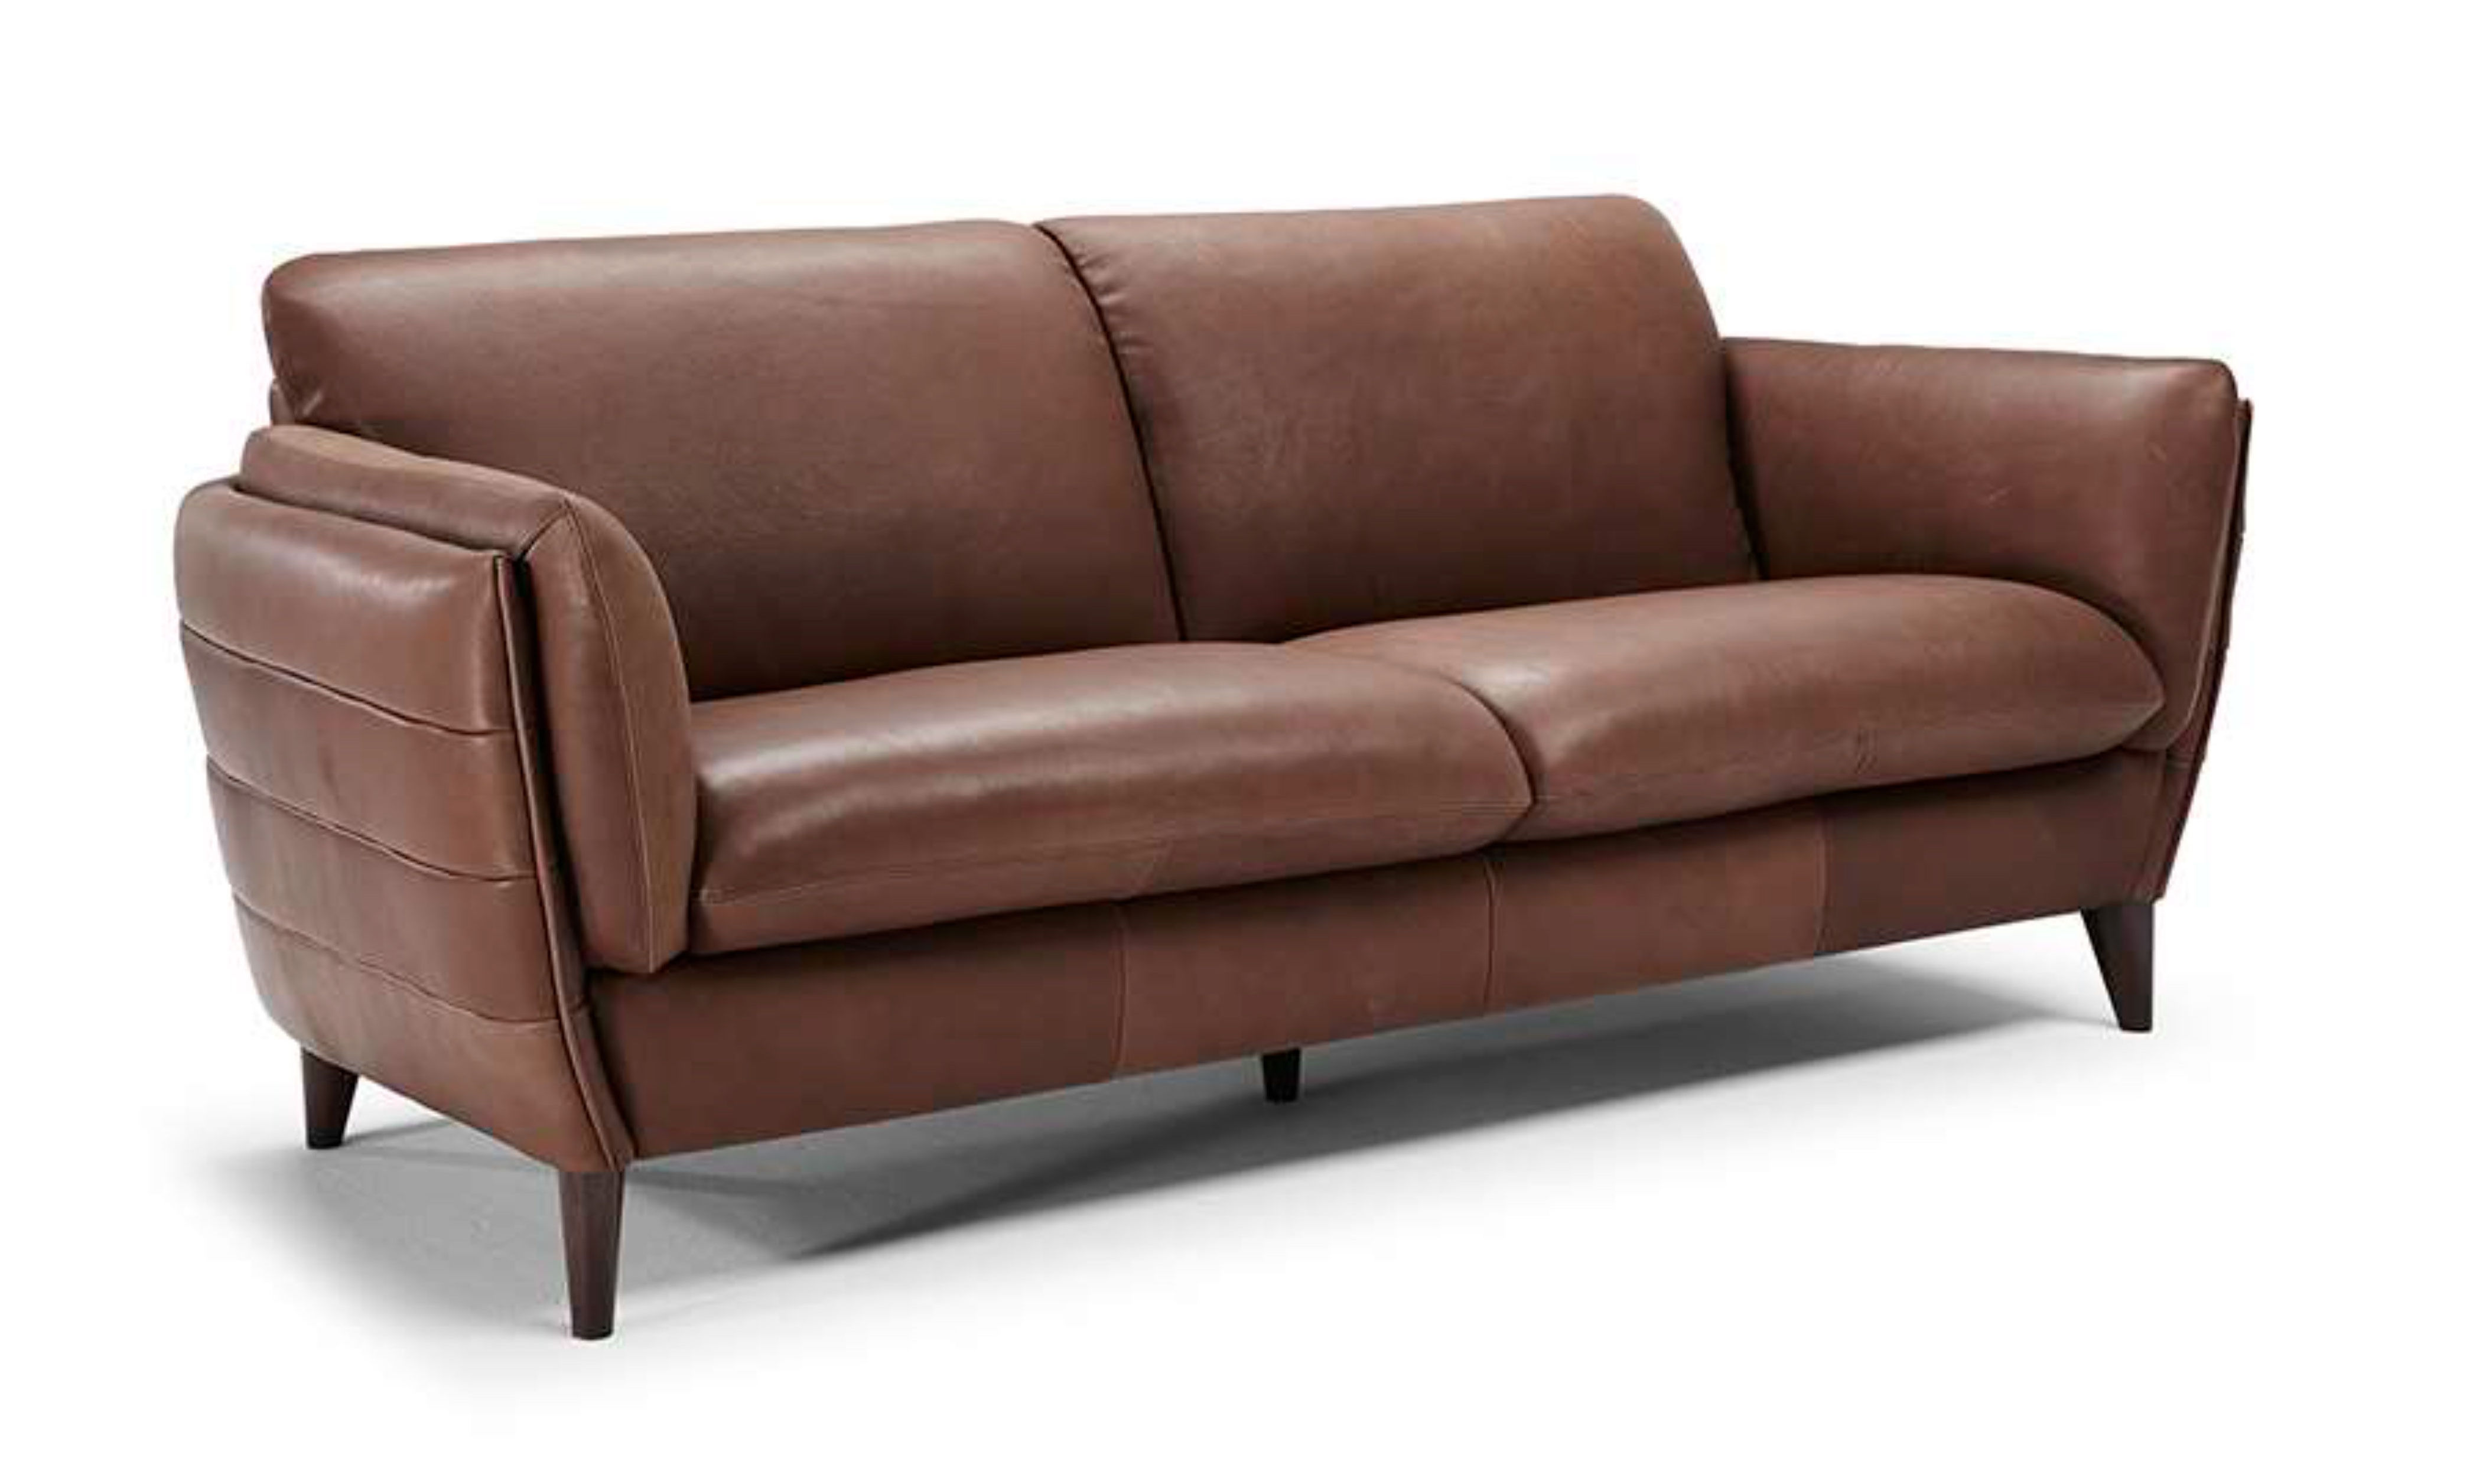 Geloso B908 Top Grain Leather Sofa, Where Are Natuzzi Leather Sofas Made